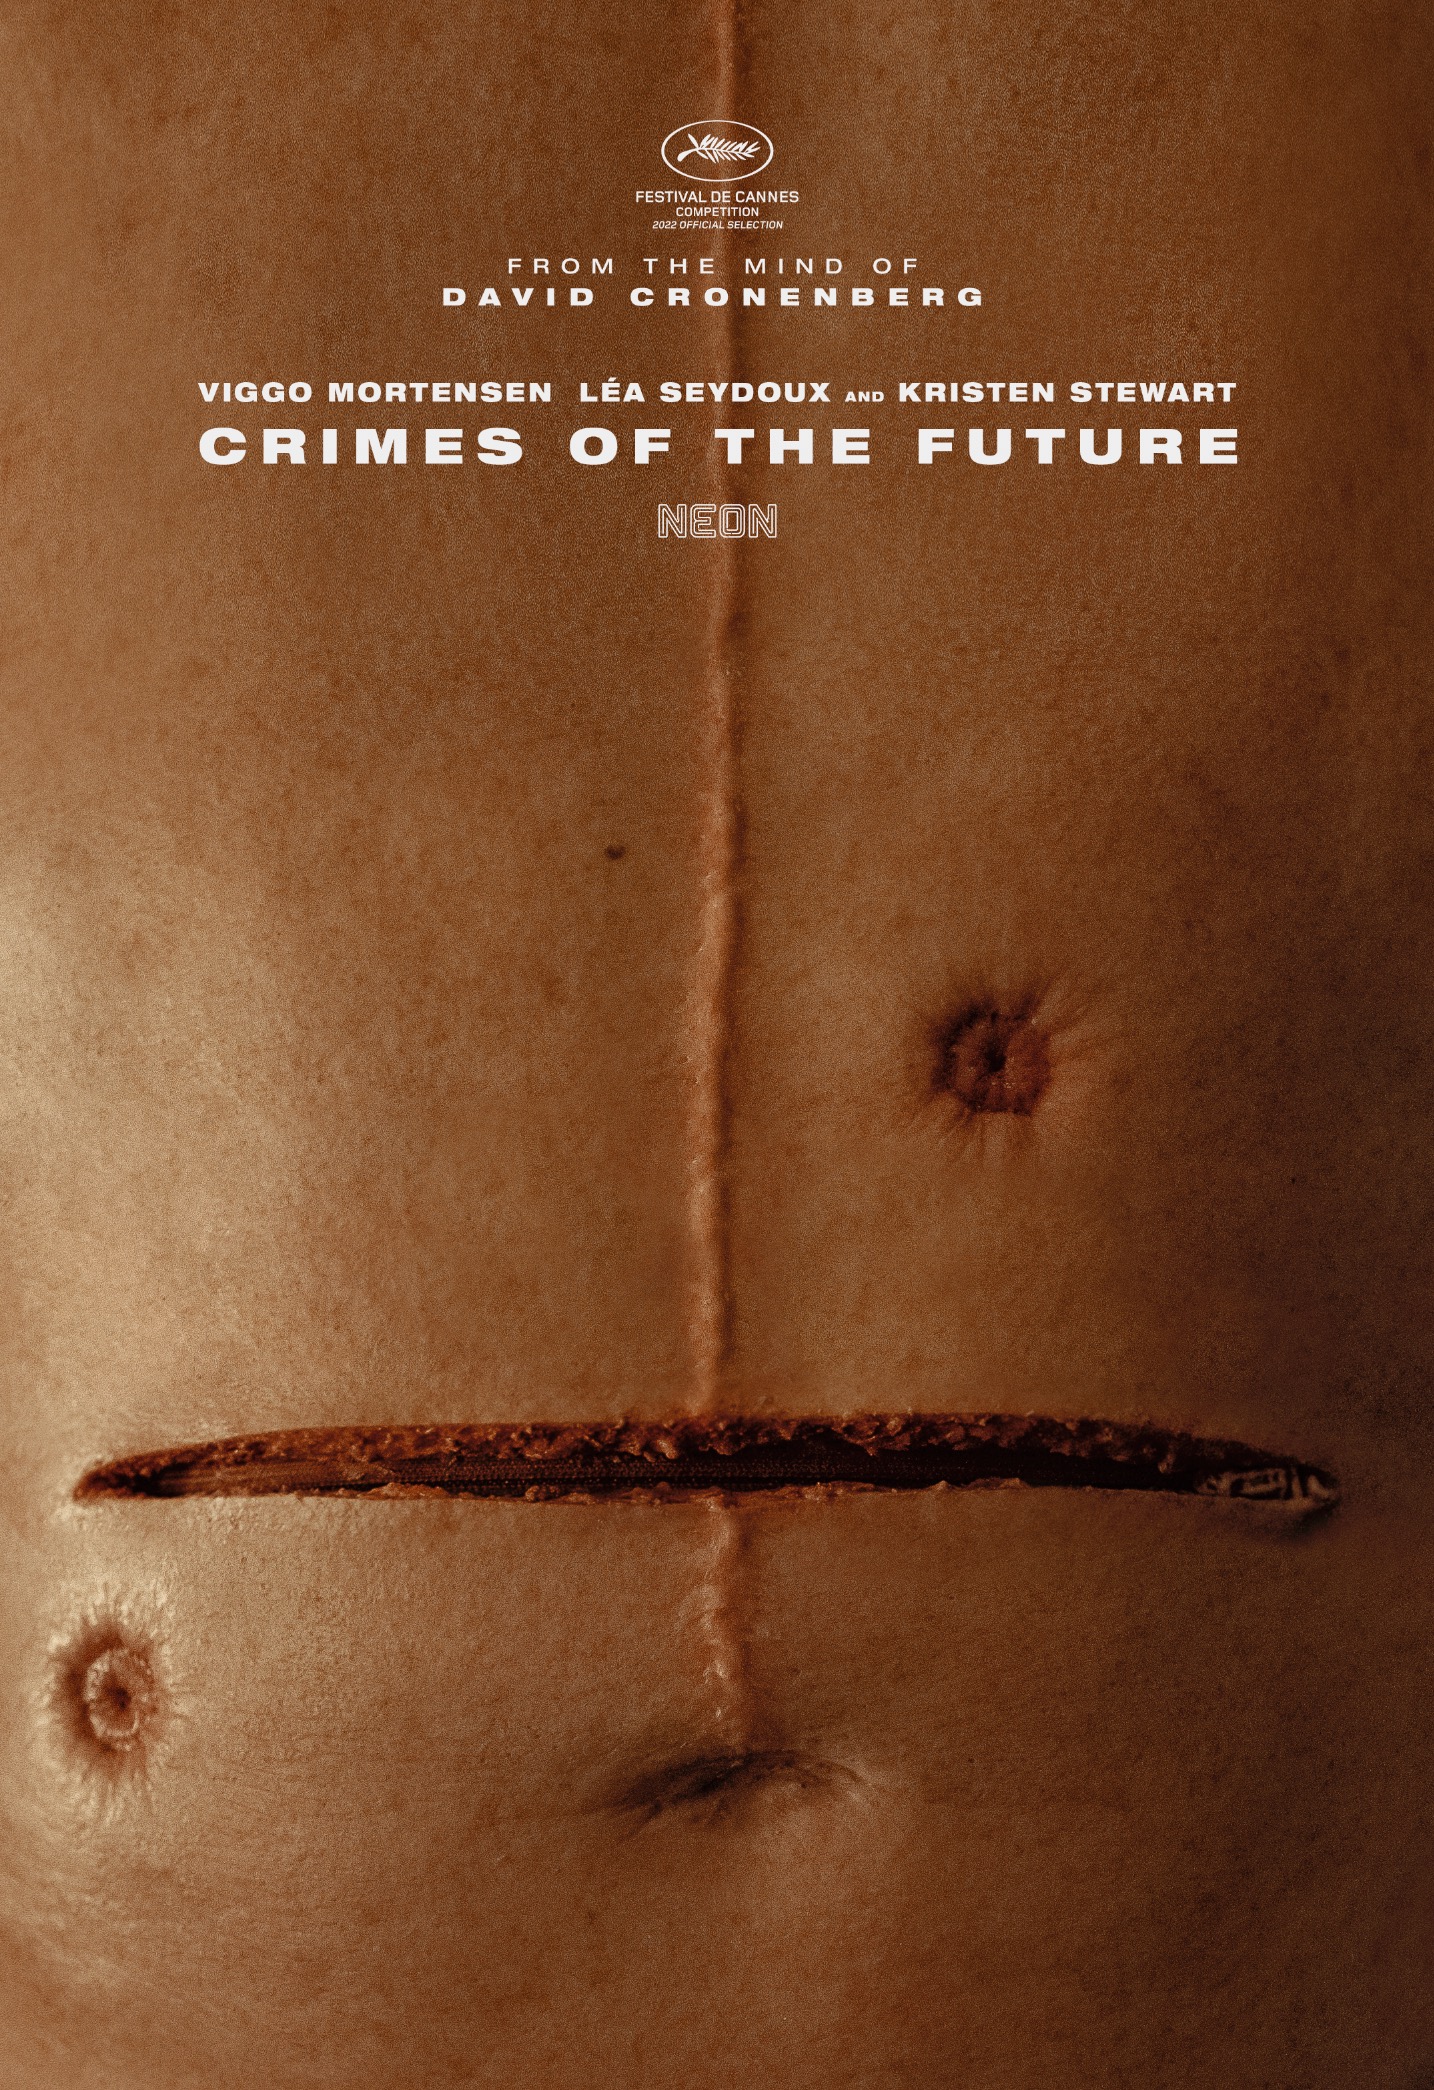 Poster de Crimes of the Future, de David Cronenberg.